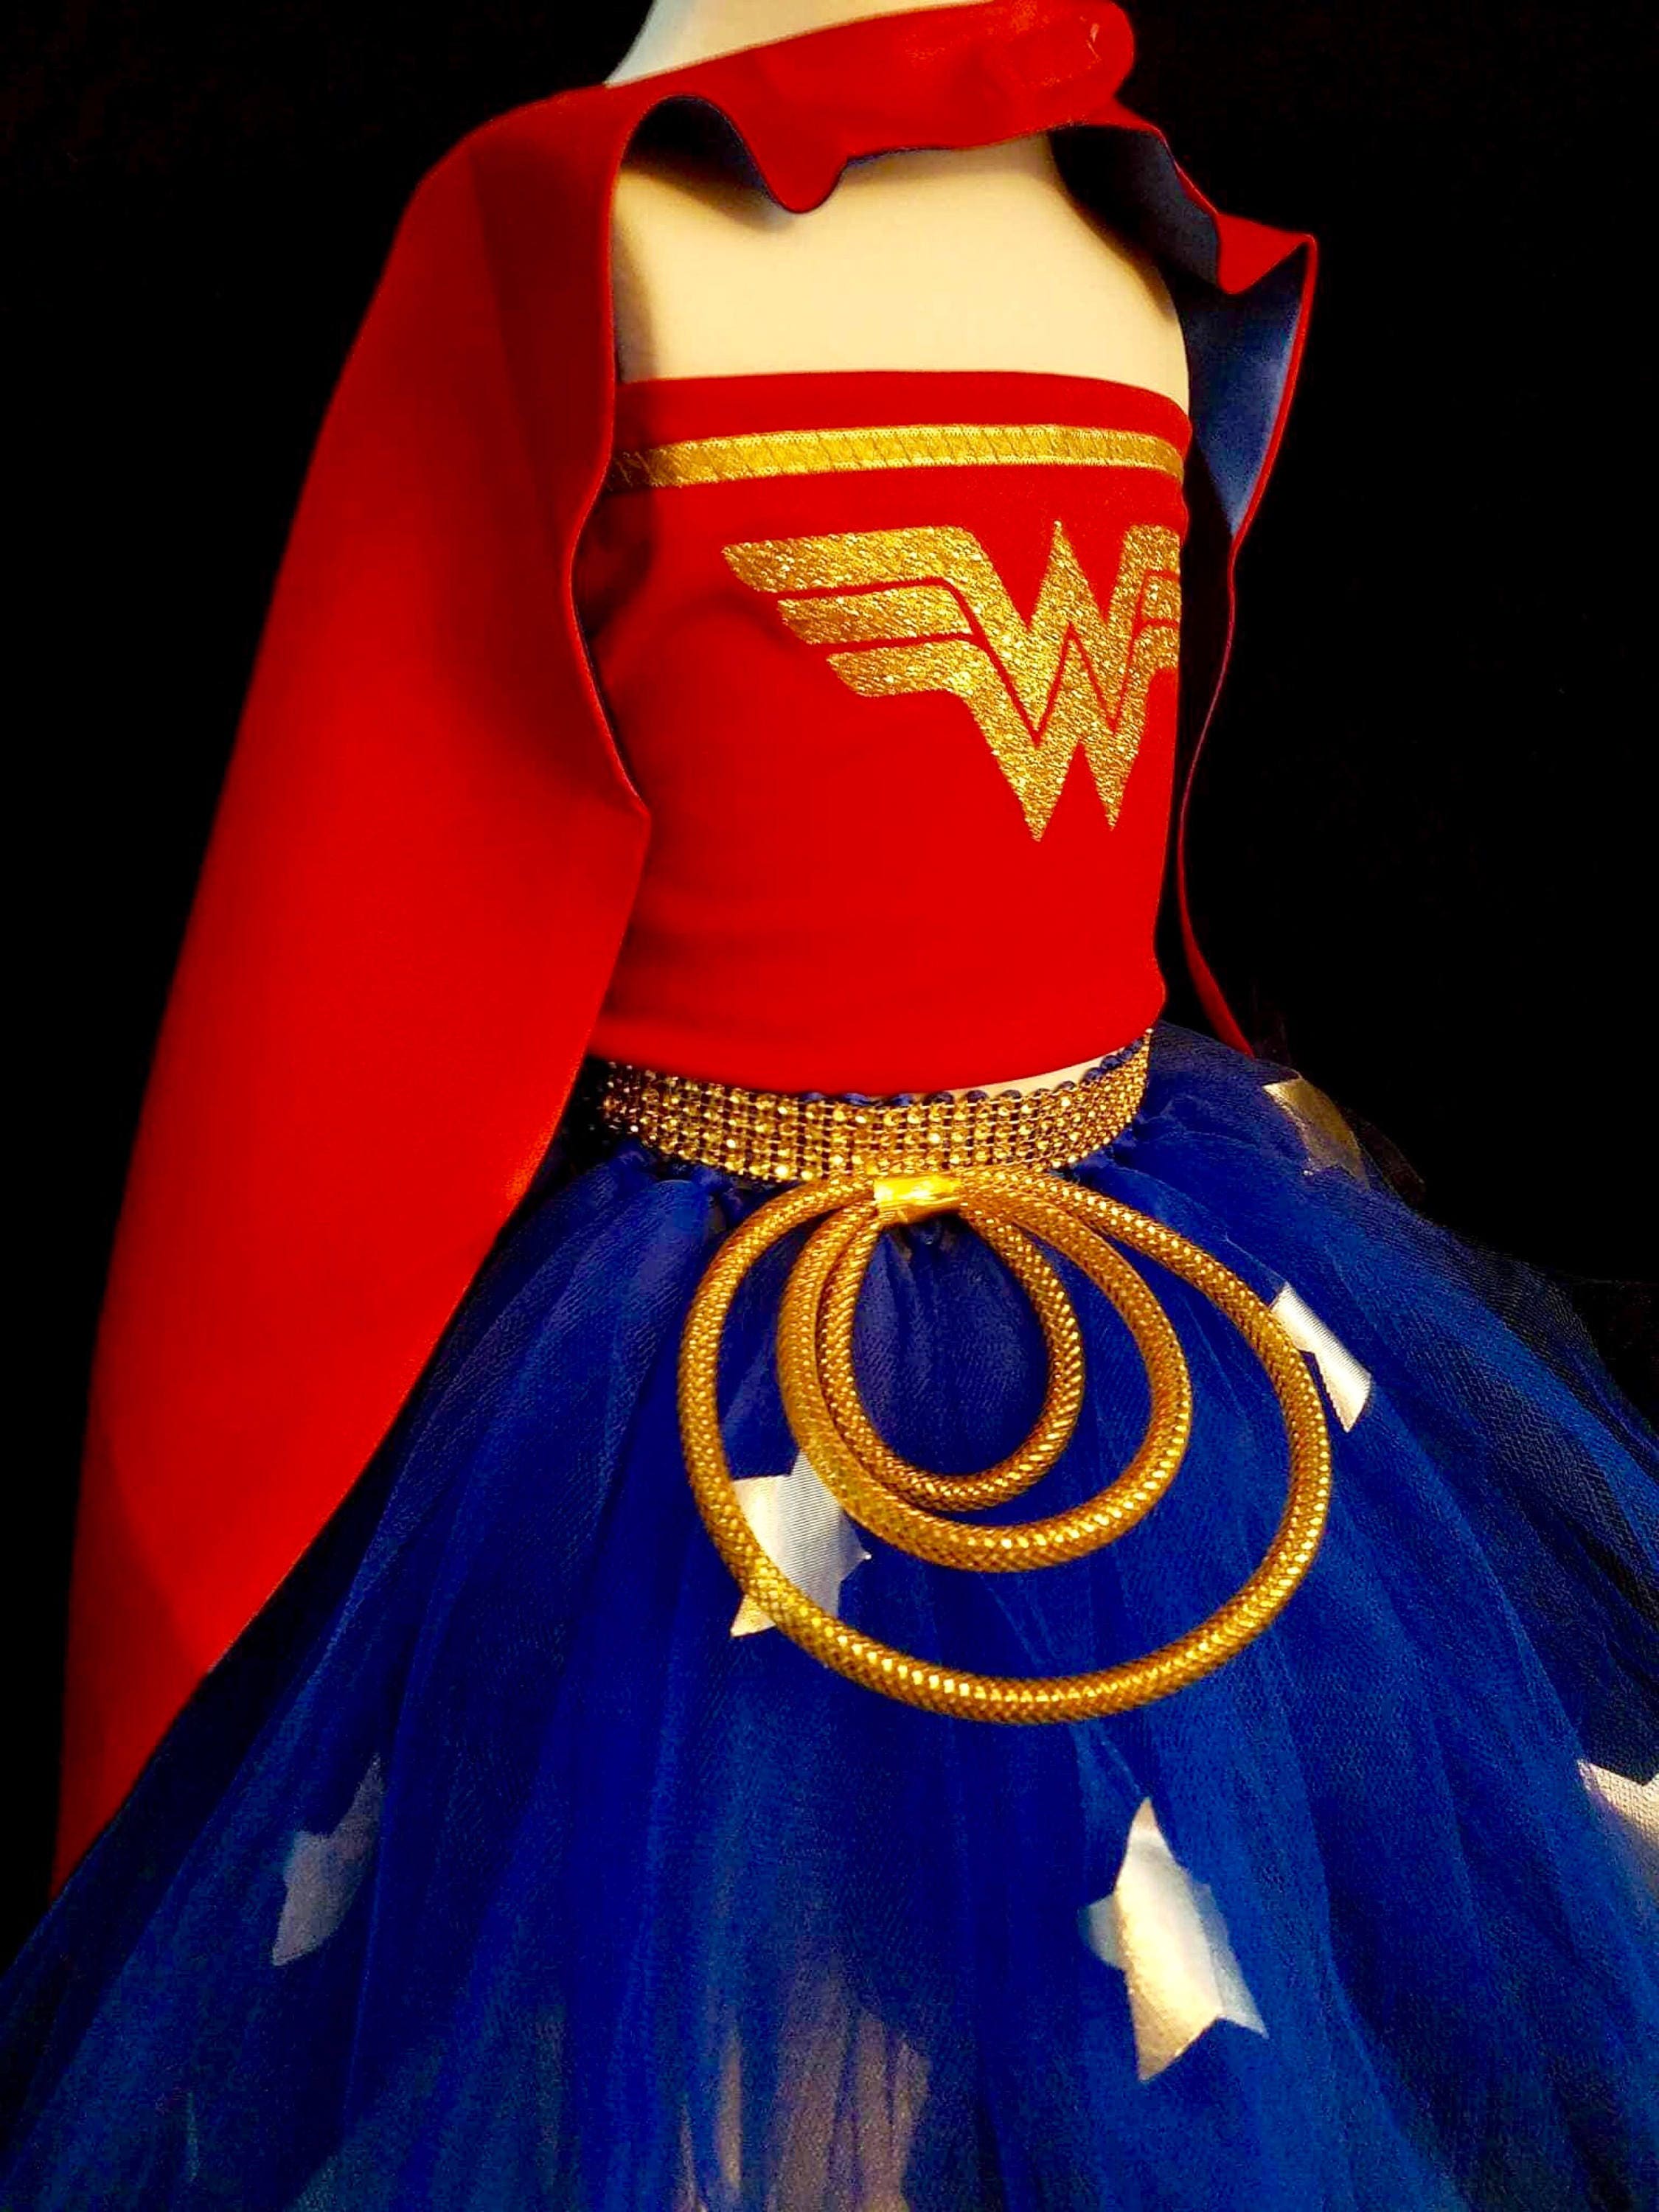 Girl Wonder Woman wonder woman costume Wonder Woman outfit